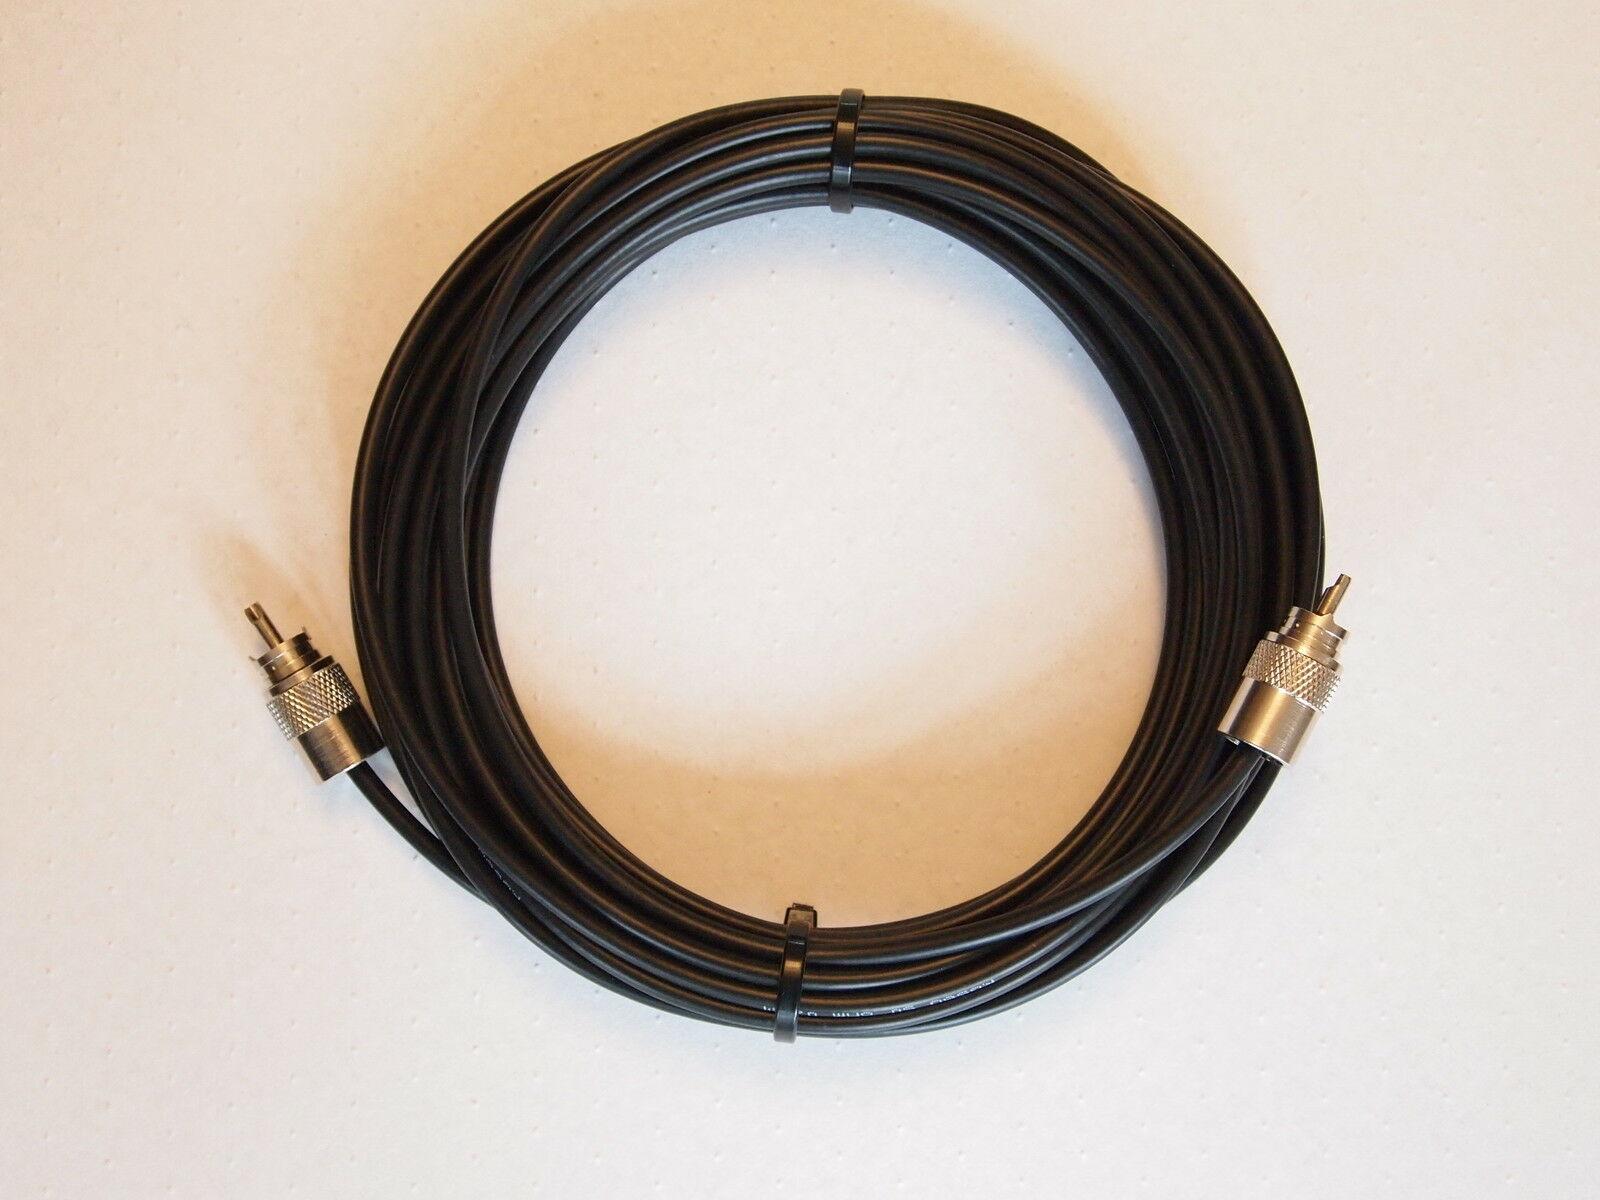 Sigma RG-58 Military Spec Coax cable 2 Metre Lead 2 x PL259 Male Connectors